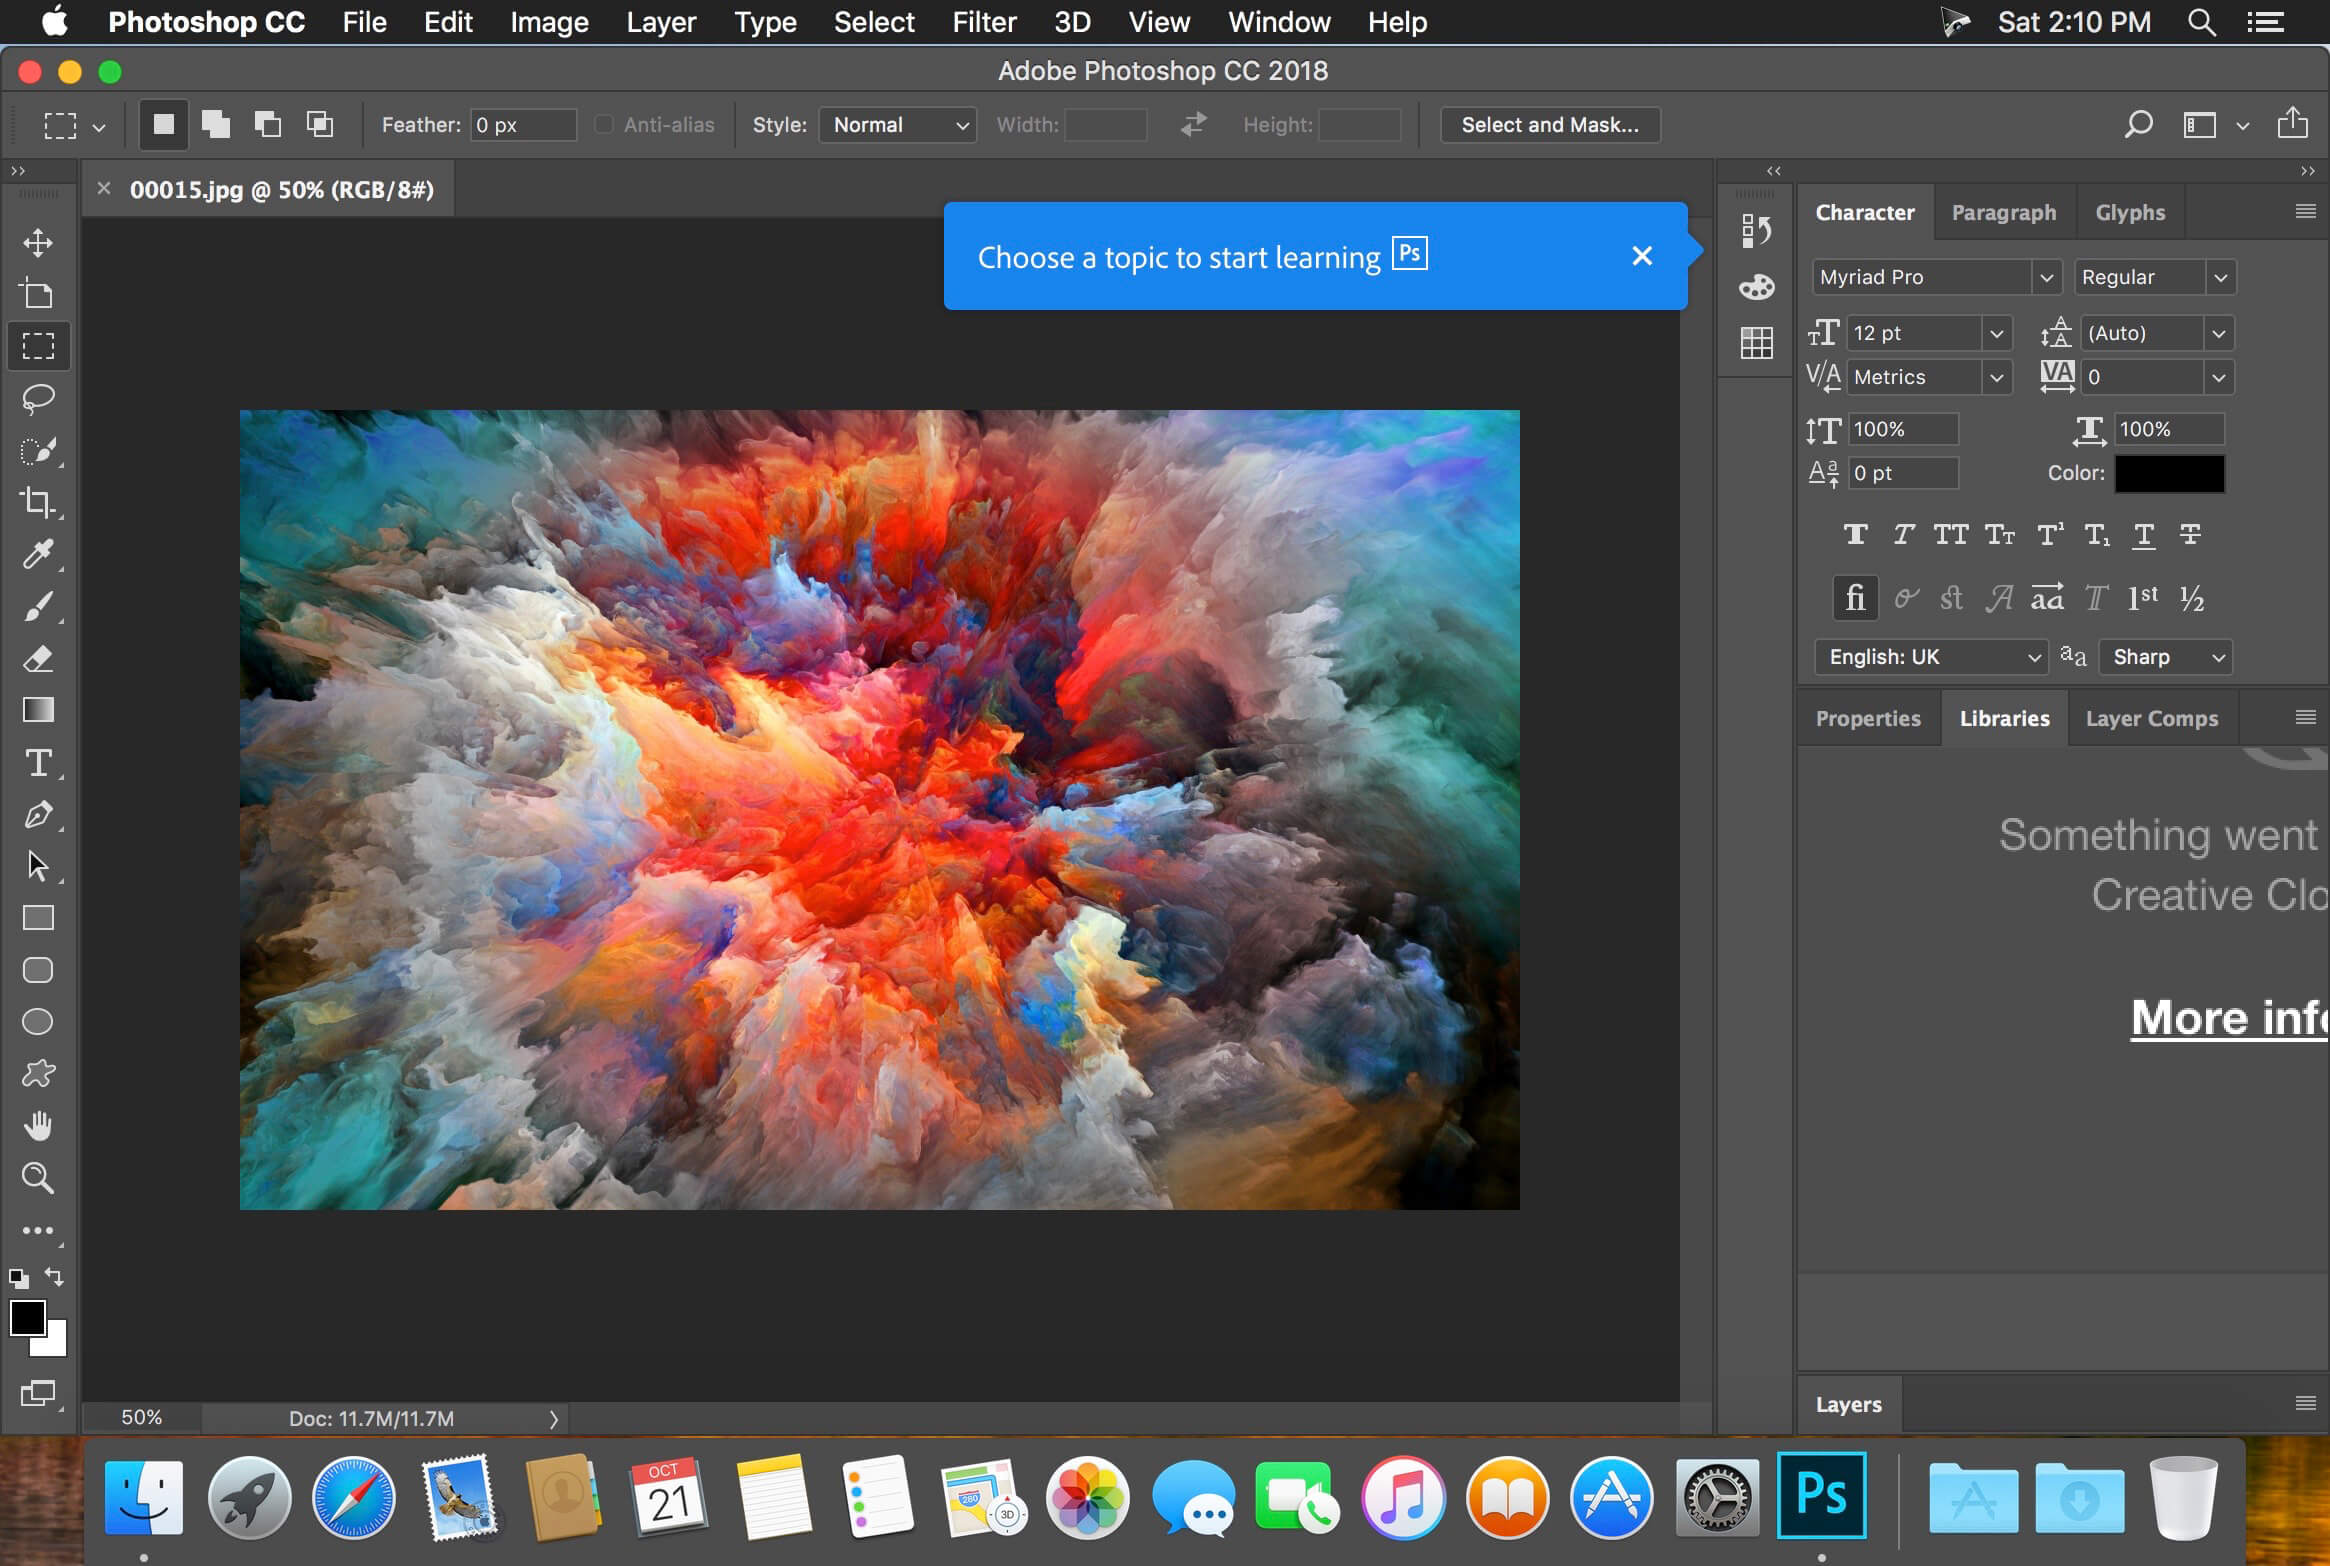 Adobe Photoshop CC 2018 v19.1.6 download | macOS